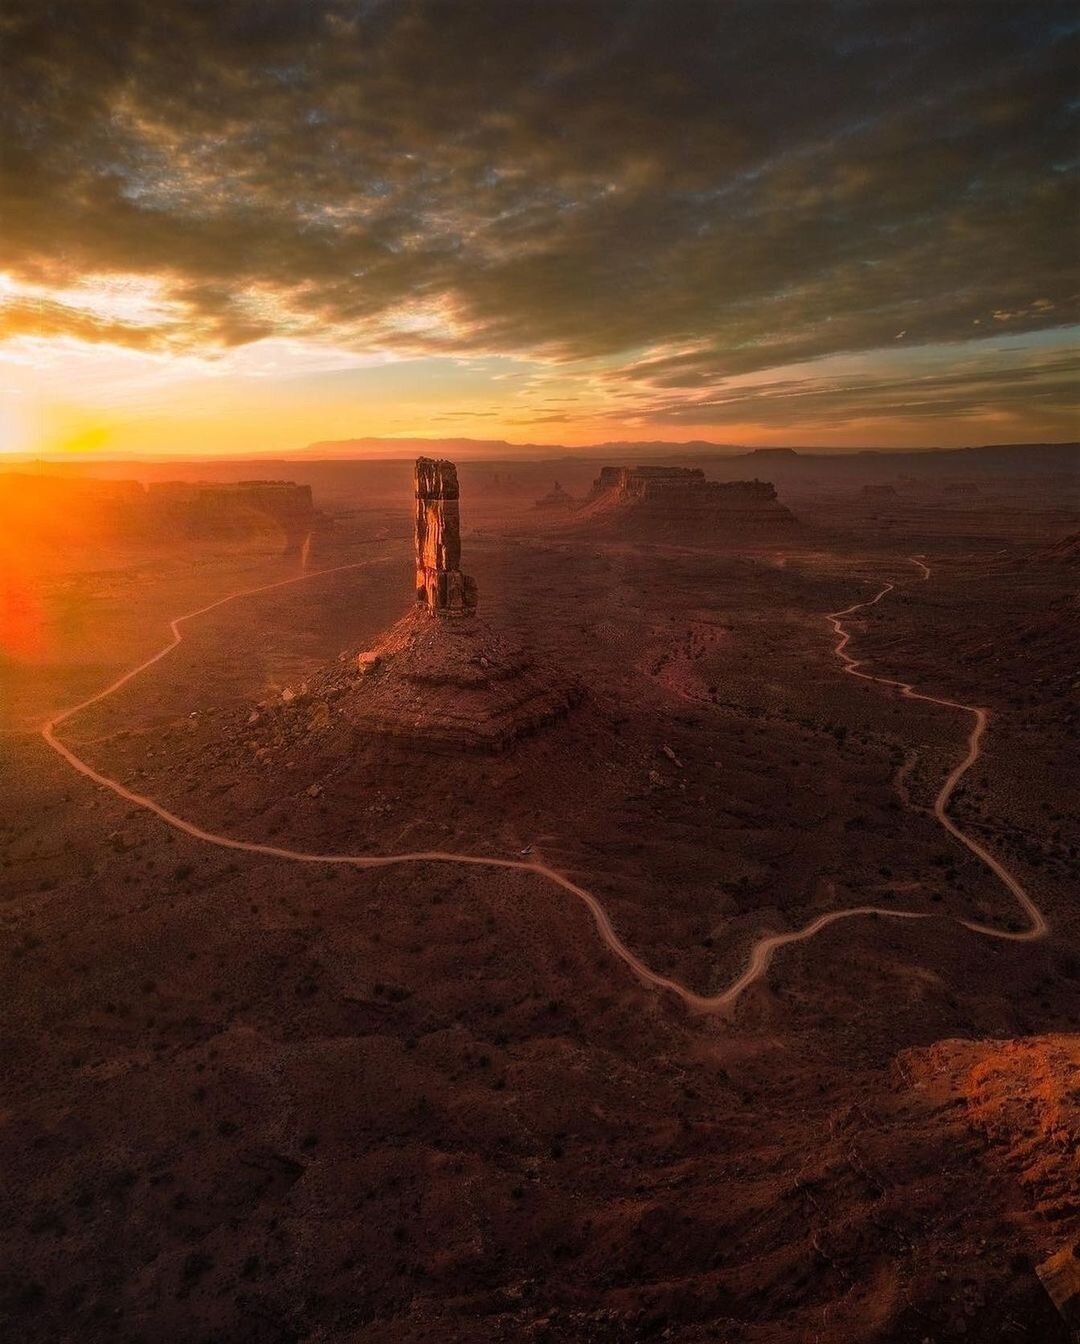 The stunning landscapes of Utah, United States 🇺🇸 
Photography // @austinpedersen__
Curated by @steffeneisenacher

#utah #desert #unitedstates #america #dronephotography #aerialphotography